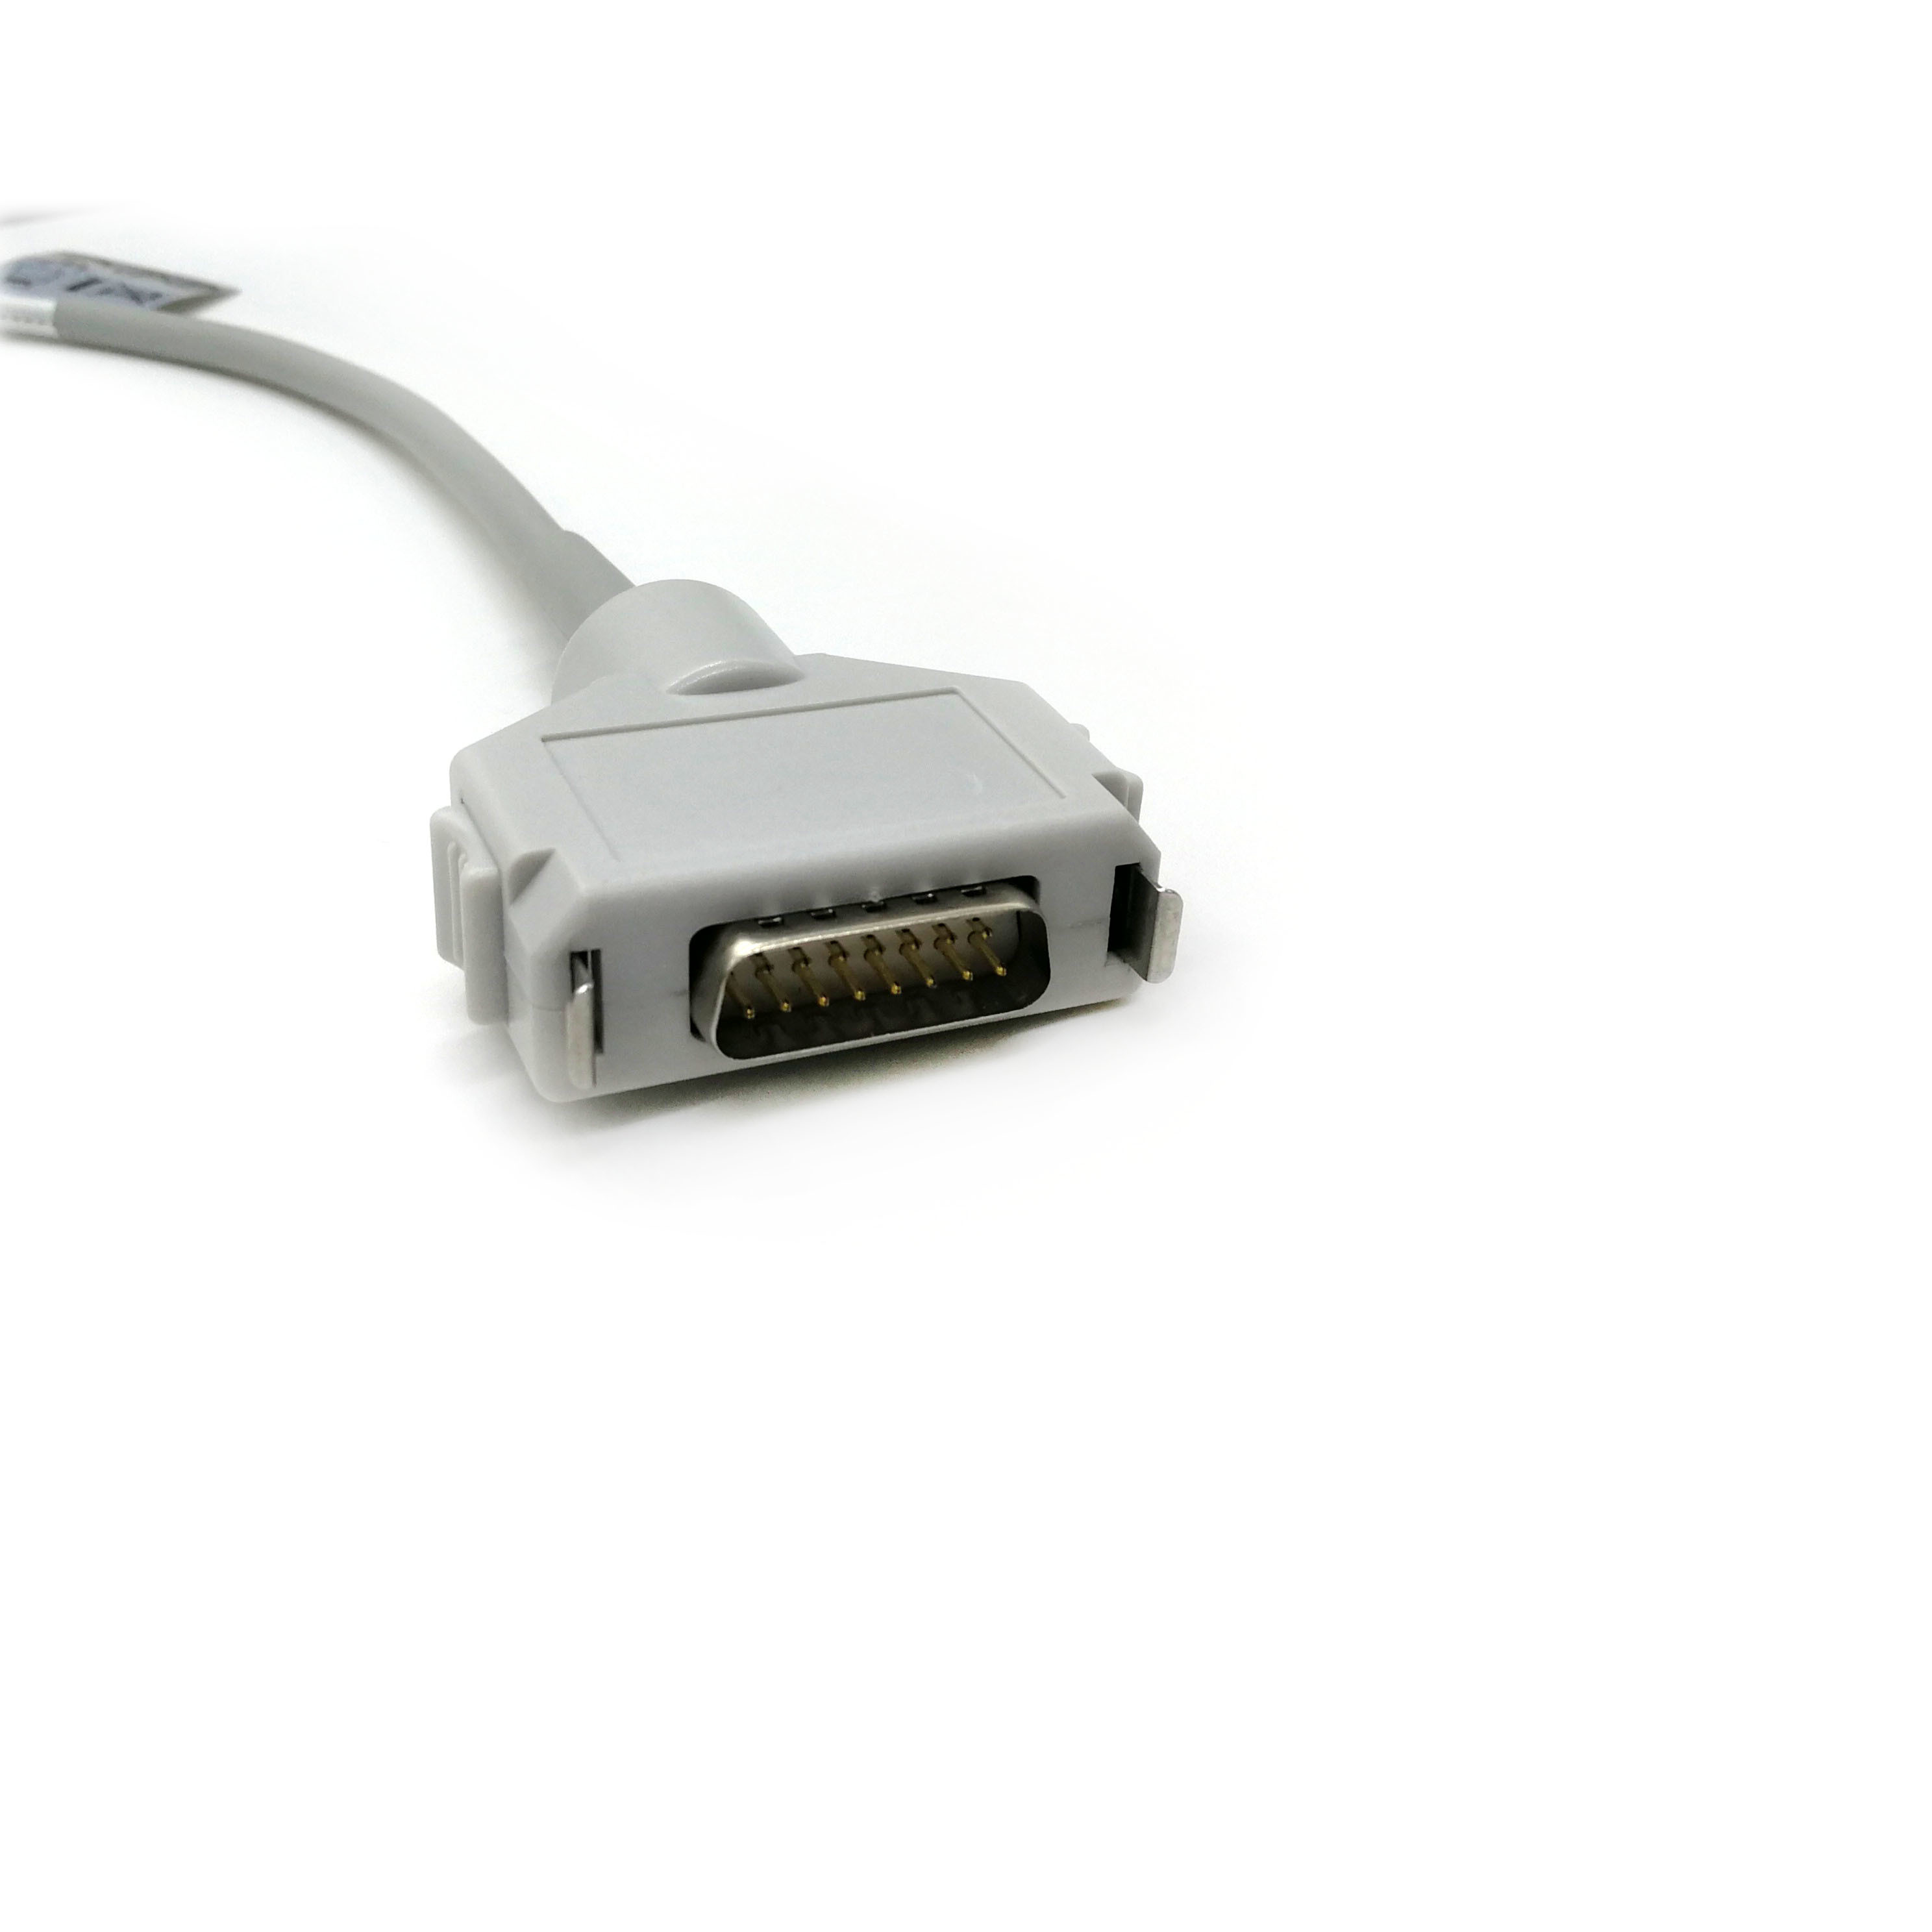 Banana4.0 10 Lead Ecg Cable EKG Cable TPU Gray Color No Resistance